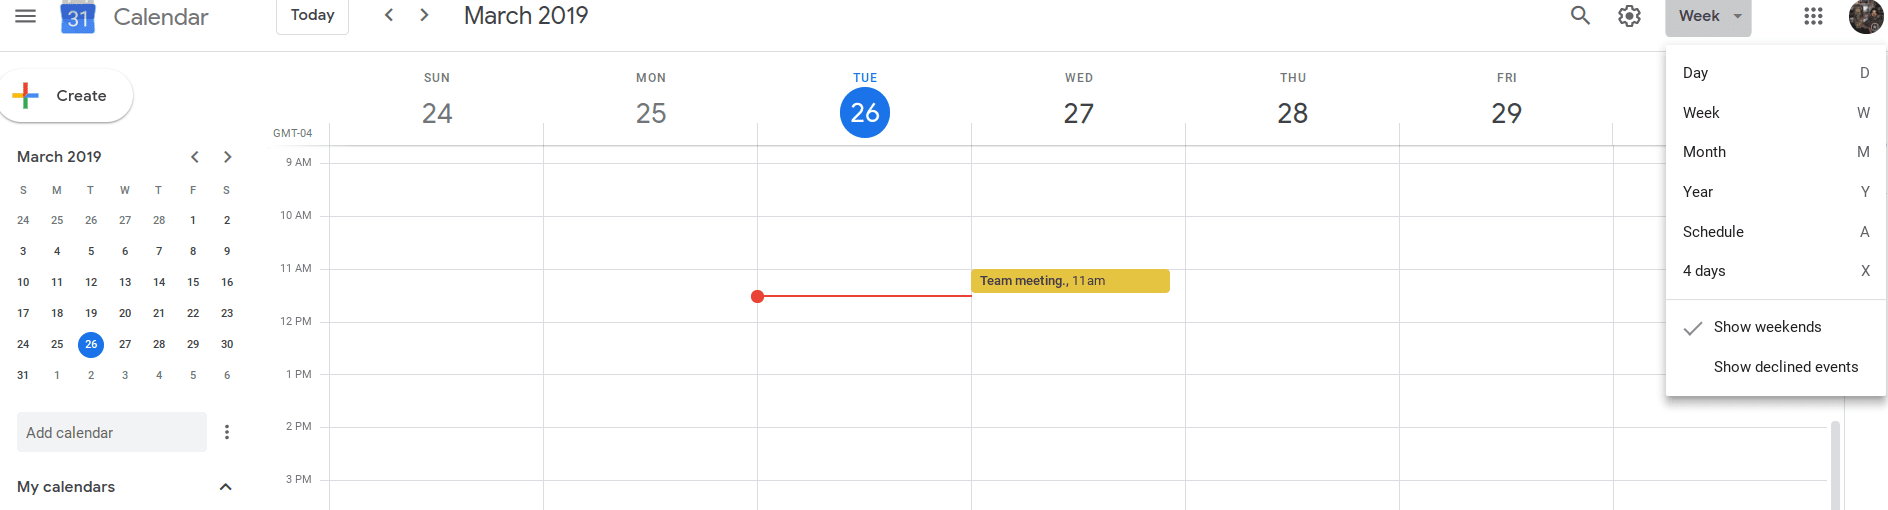 25 Google Calendar Hacks to Maximize Productivity Calendar